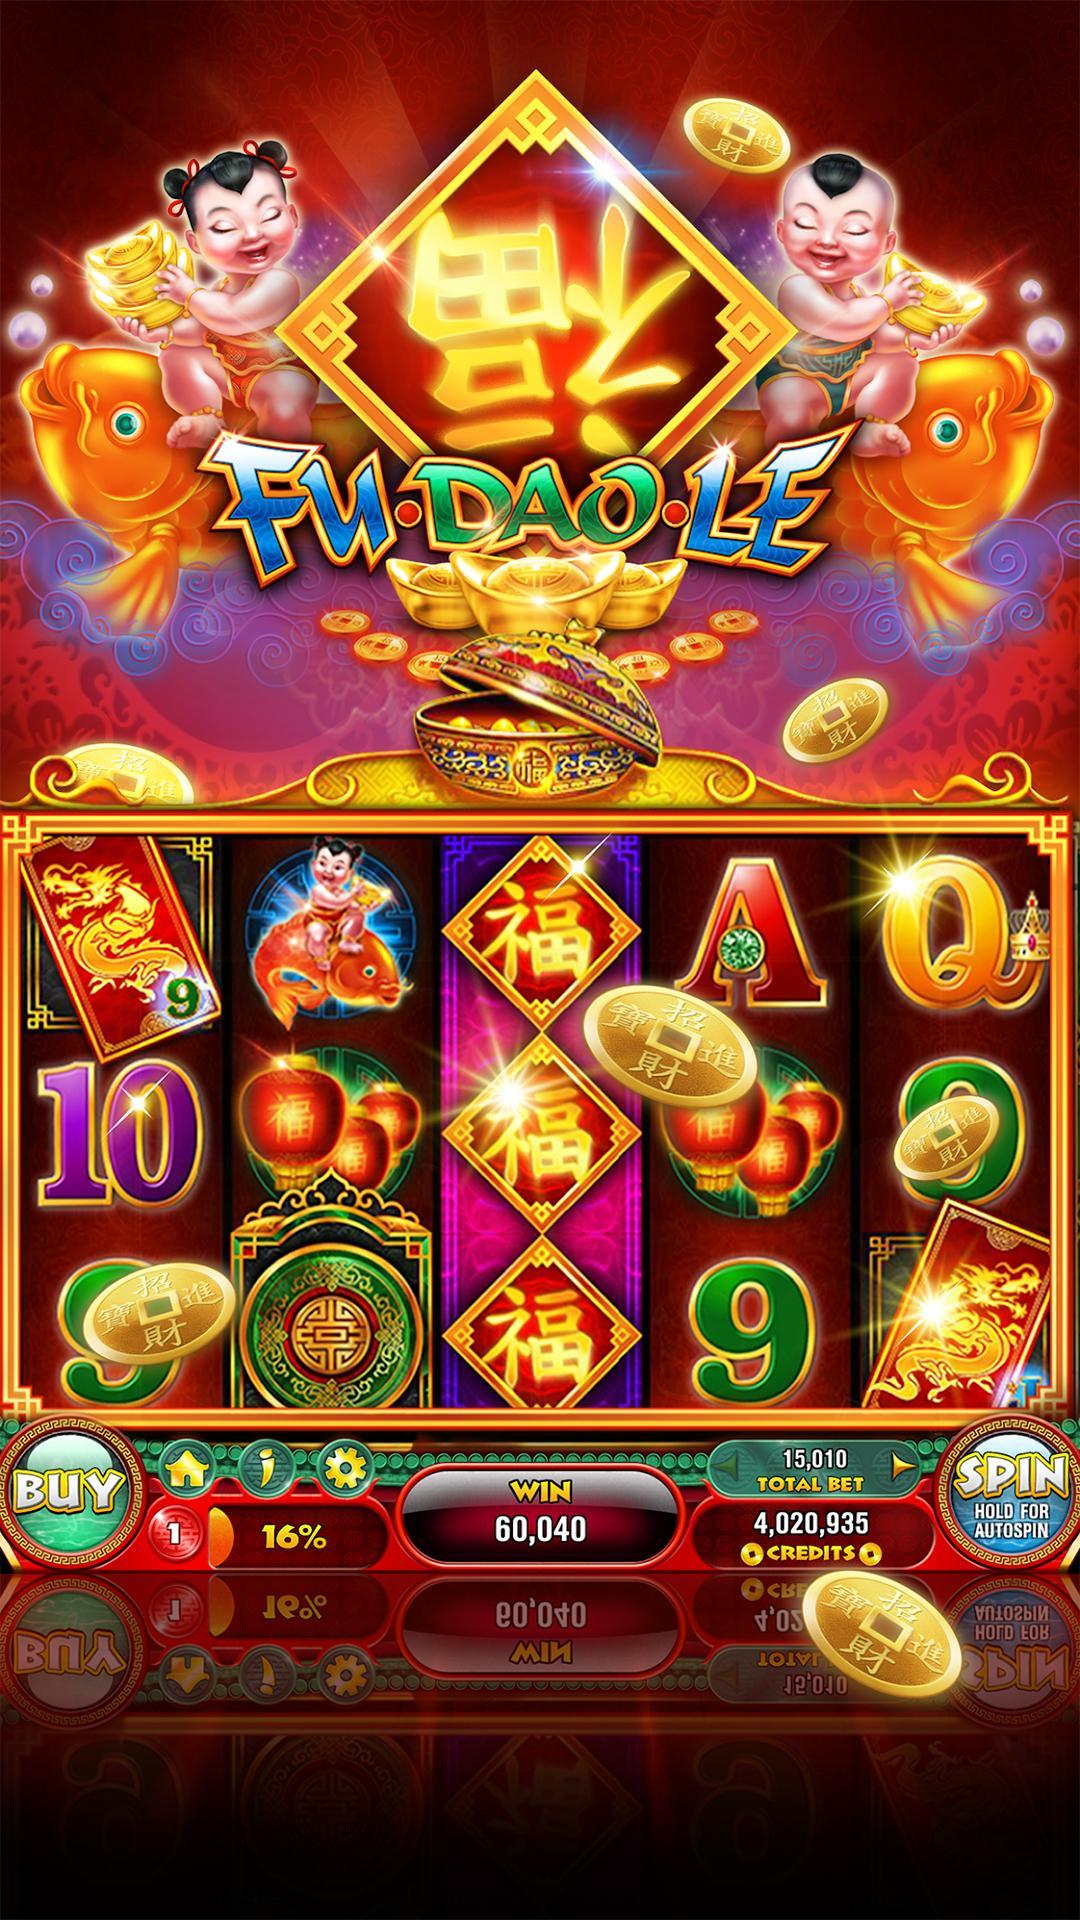 88 fortunes slot machine free